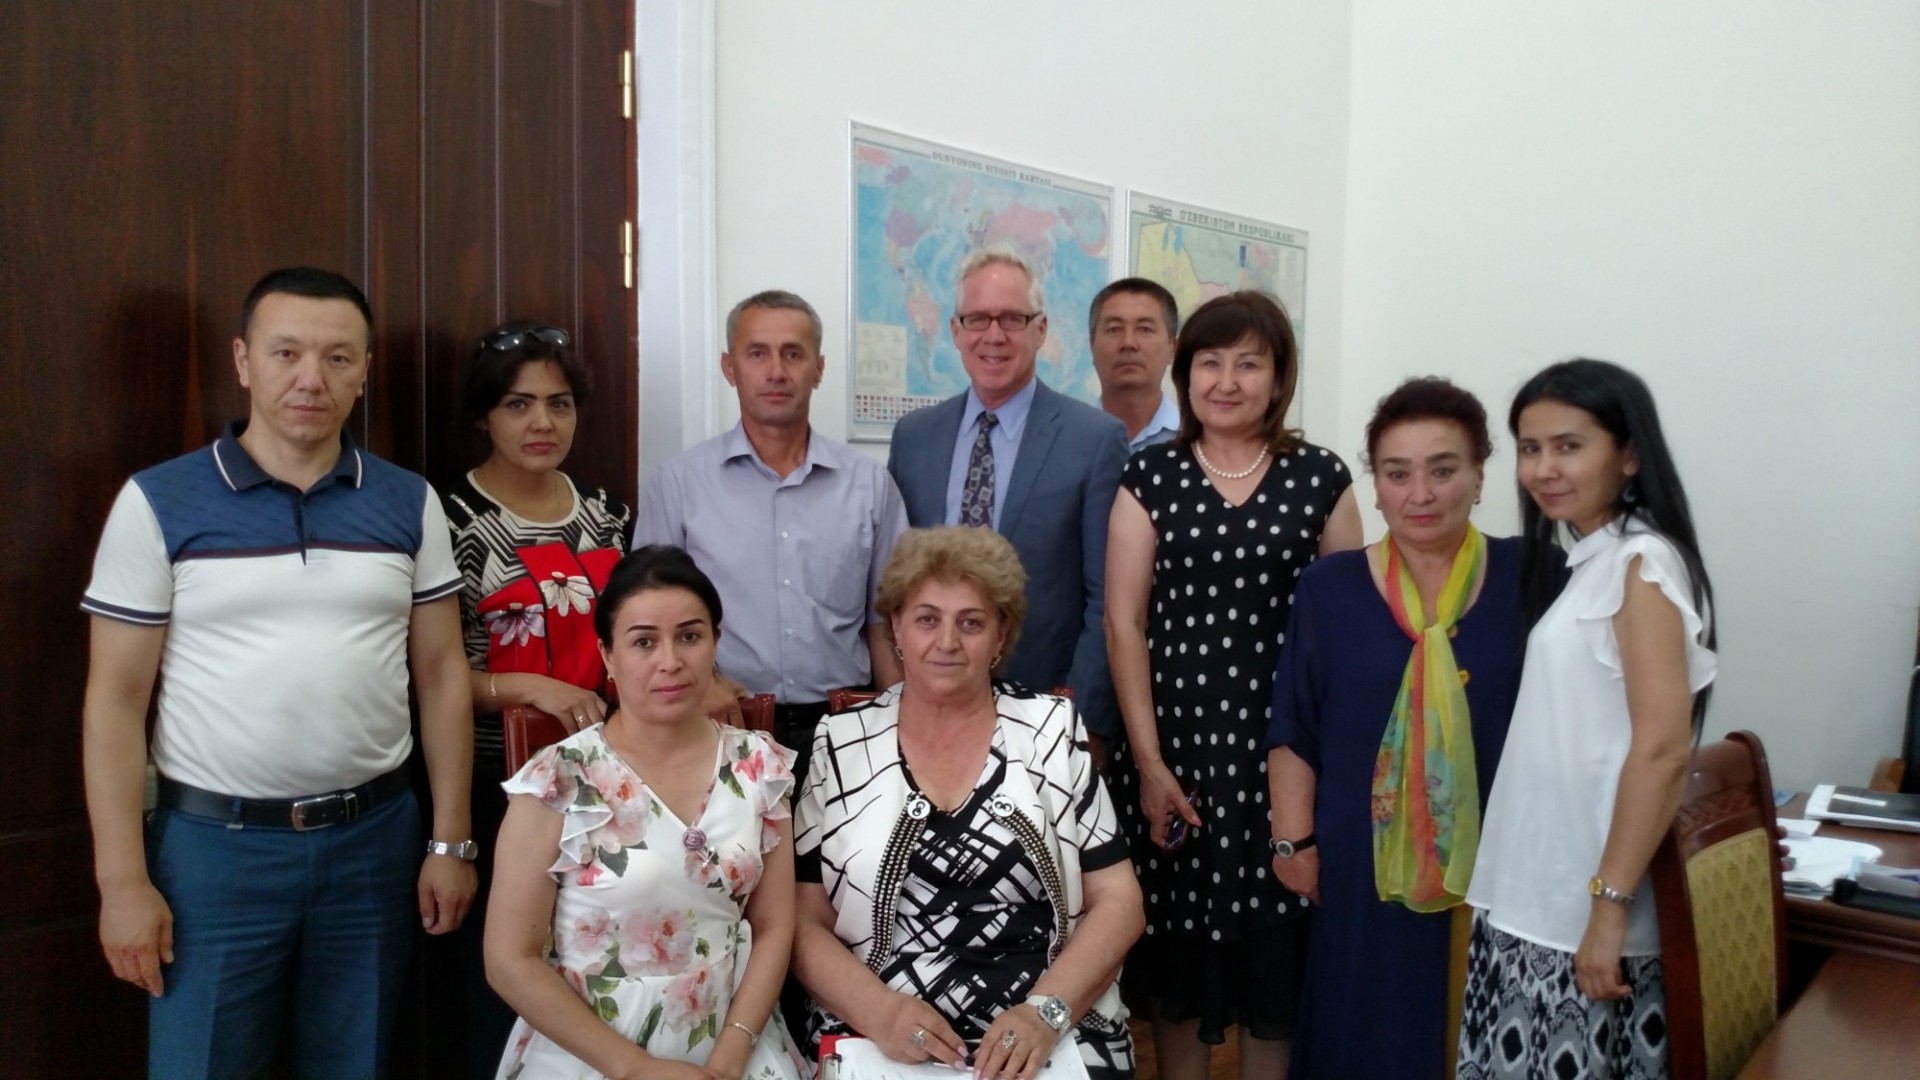 Samarkand Governmental Women's Center - Hokhimiyat (government) leadership (Deputy Major), Women's Center specialists, Samarkand, Uzbekistan June 18, 2018.